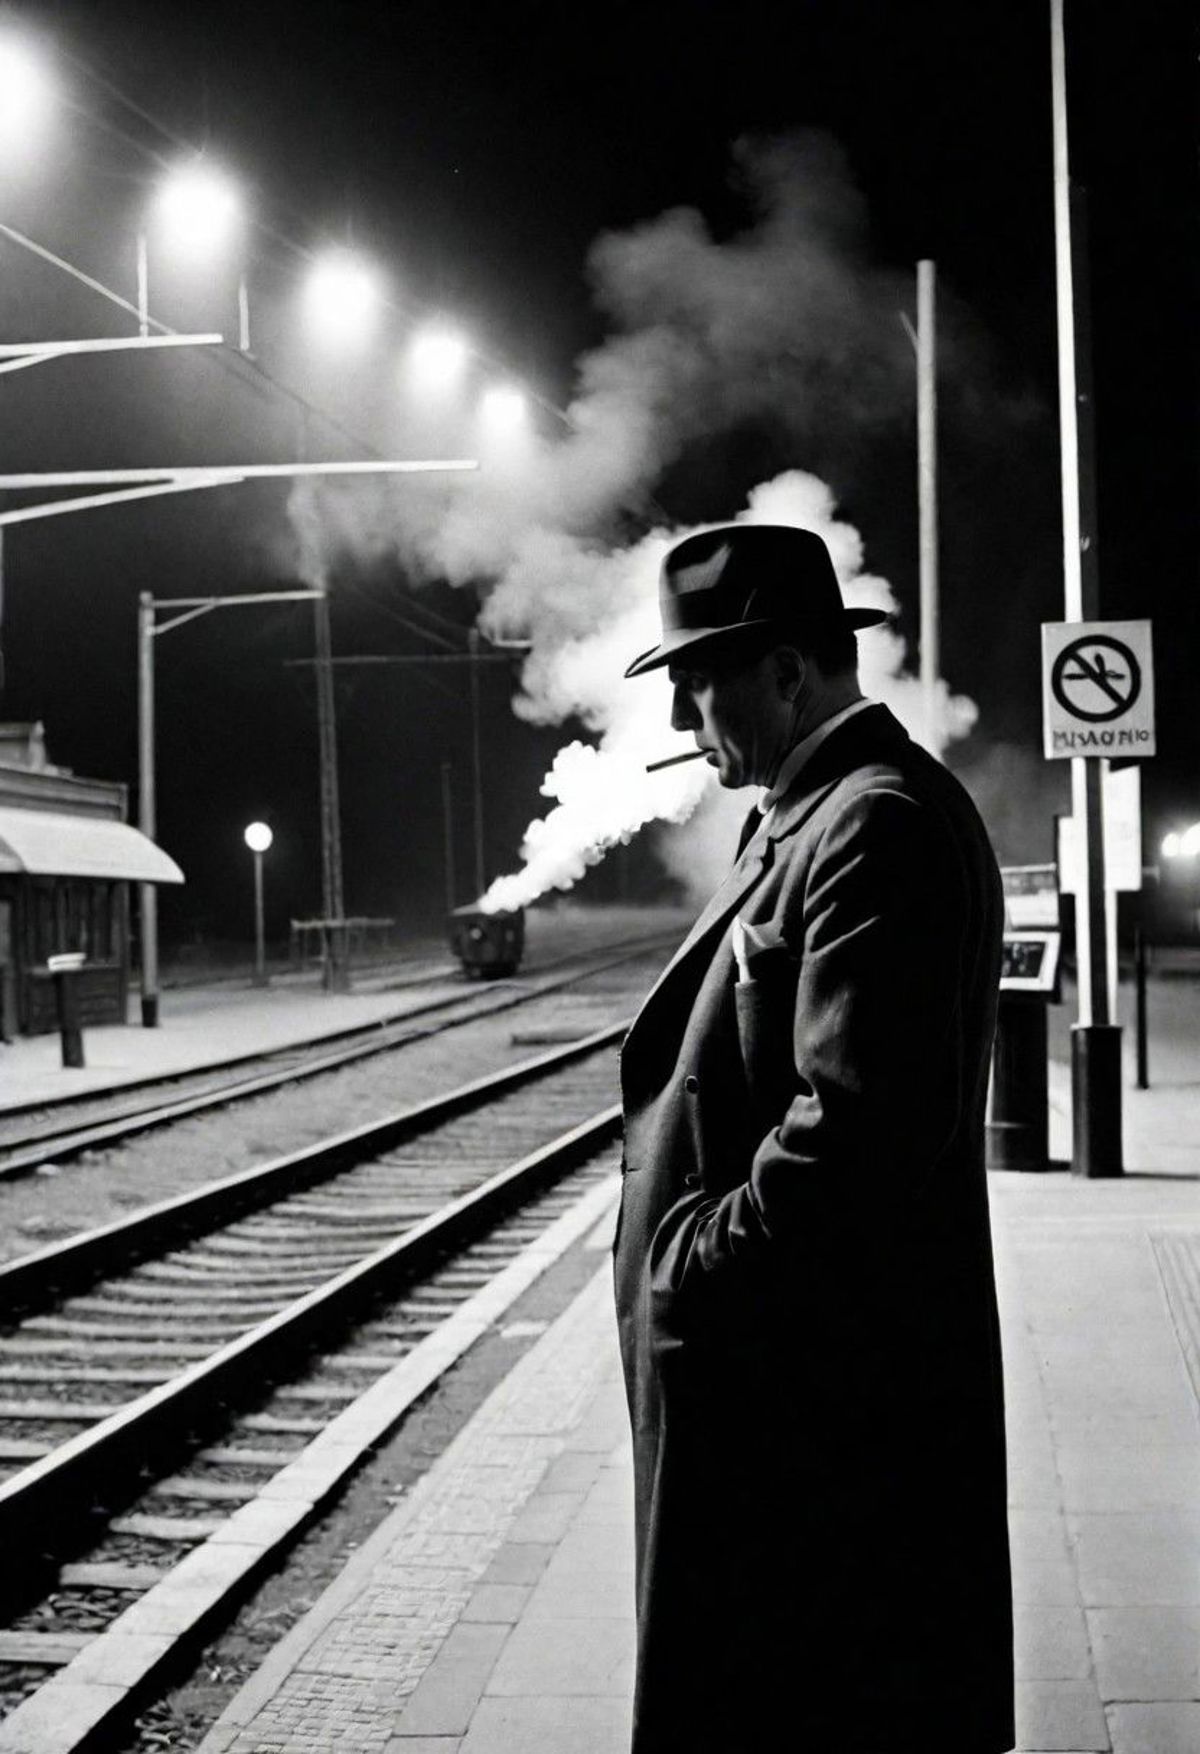 A man standing next to train tracks smoking a cigarette.